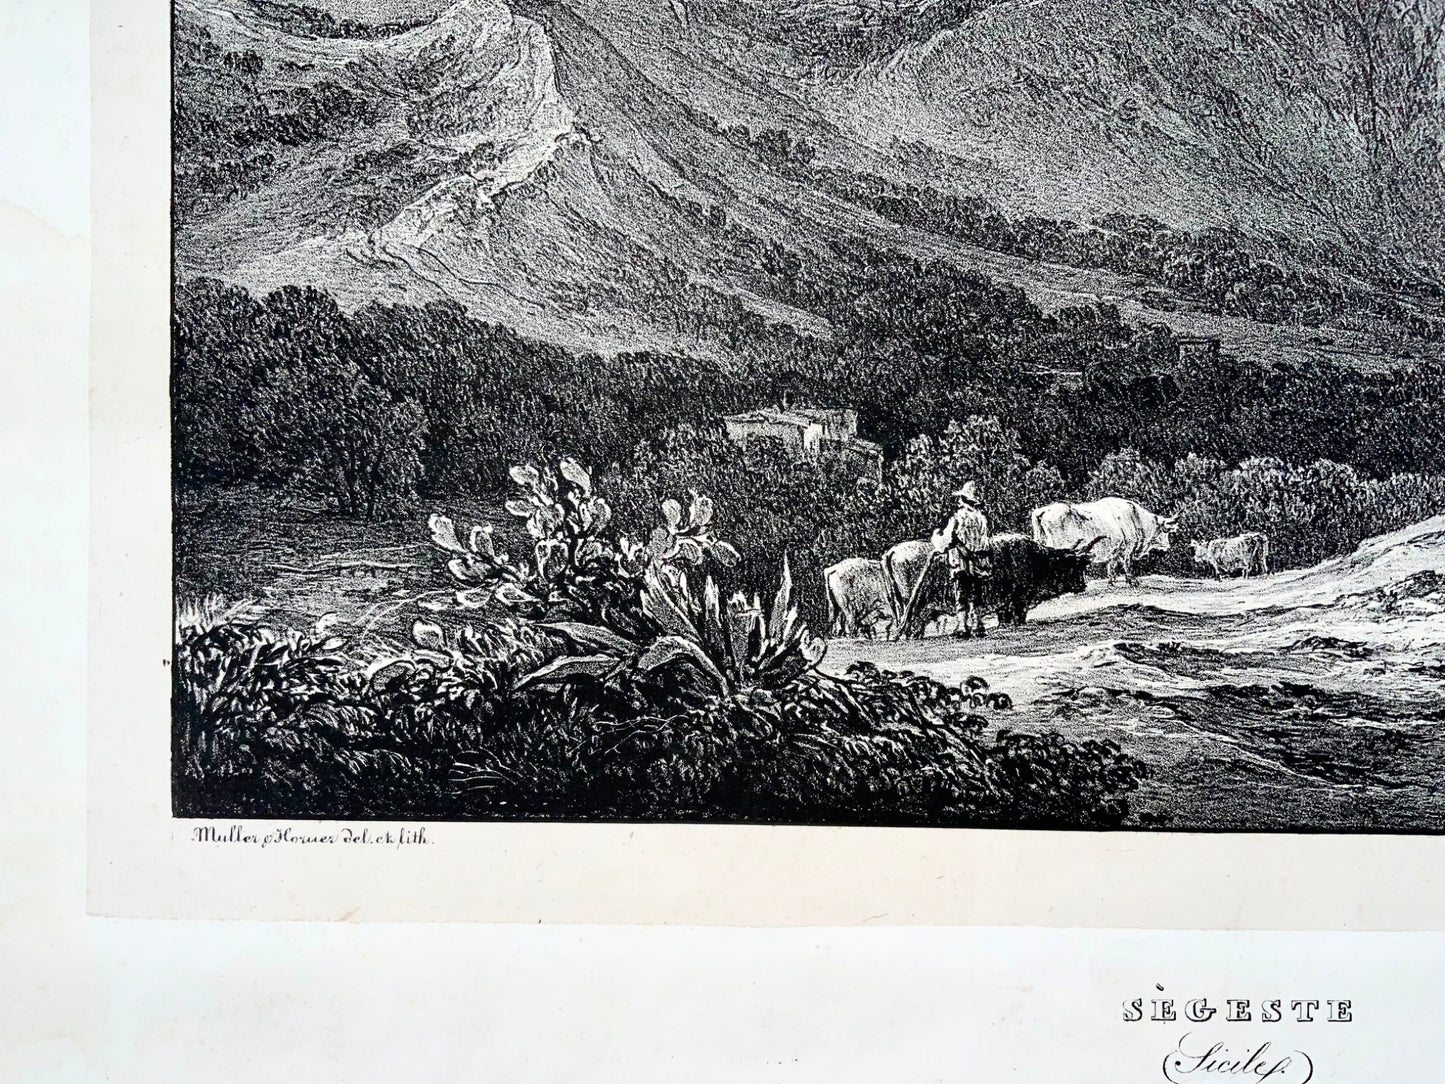 1833 Segesta Sicily, Muller & Horner, Ledoux sc., large stone lithograph